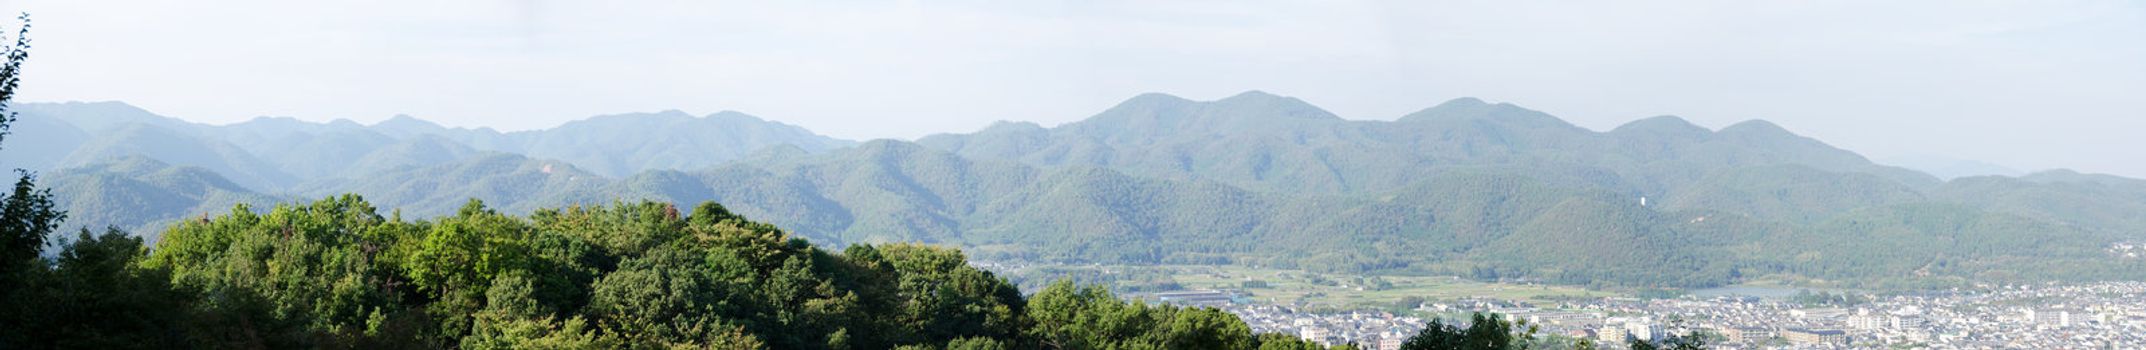 Panorama view of the mountains surrounding Arashiyama, Kyoto, Japan